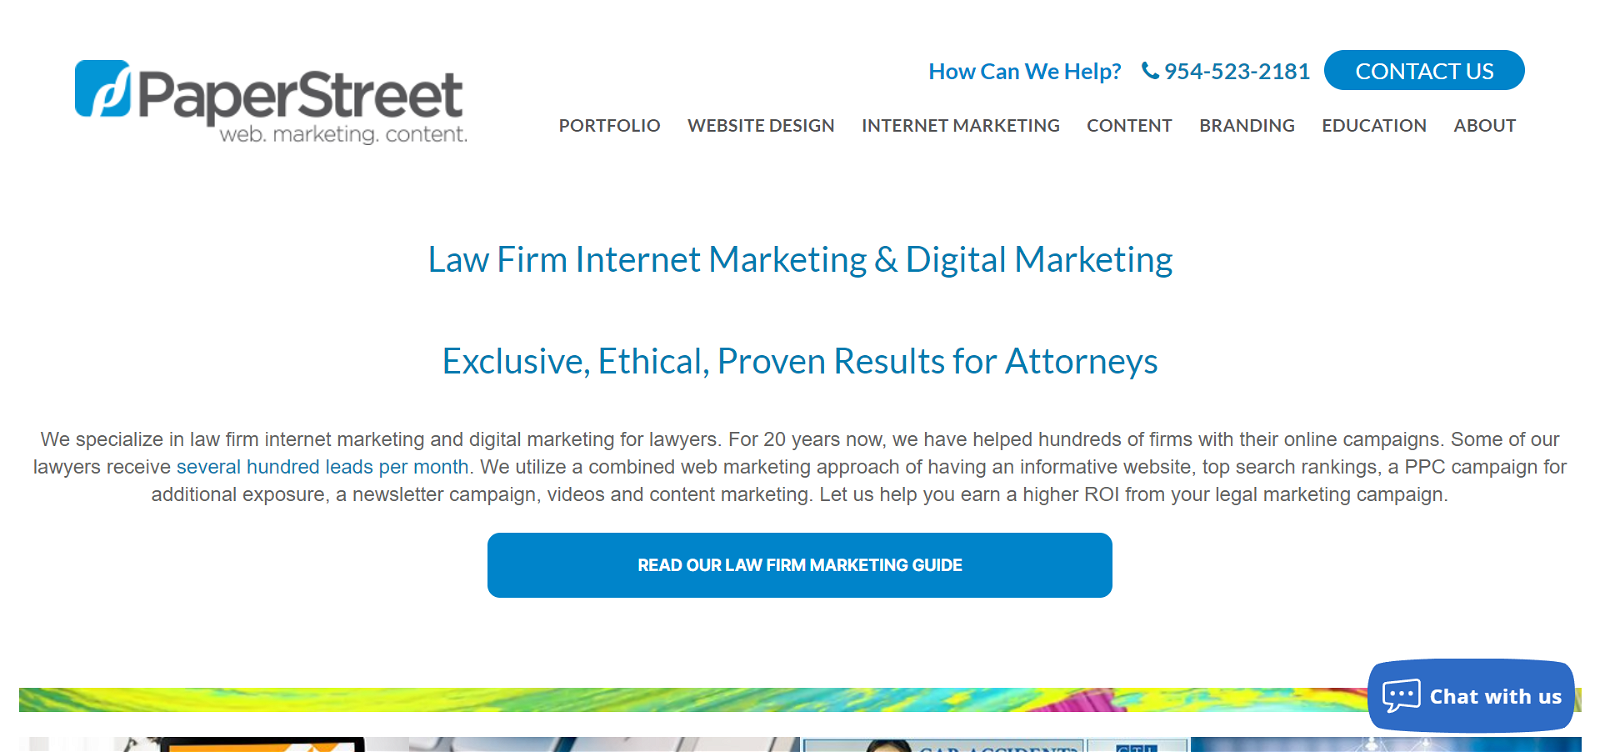 PaperStreet digital marketing agency